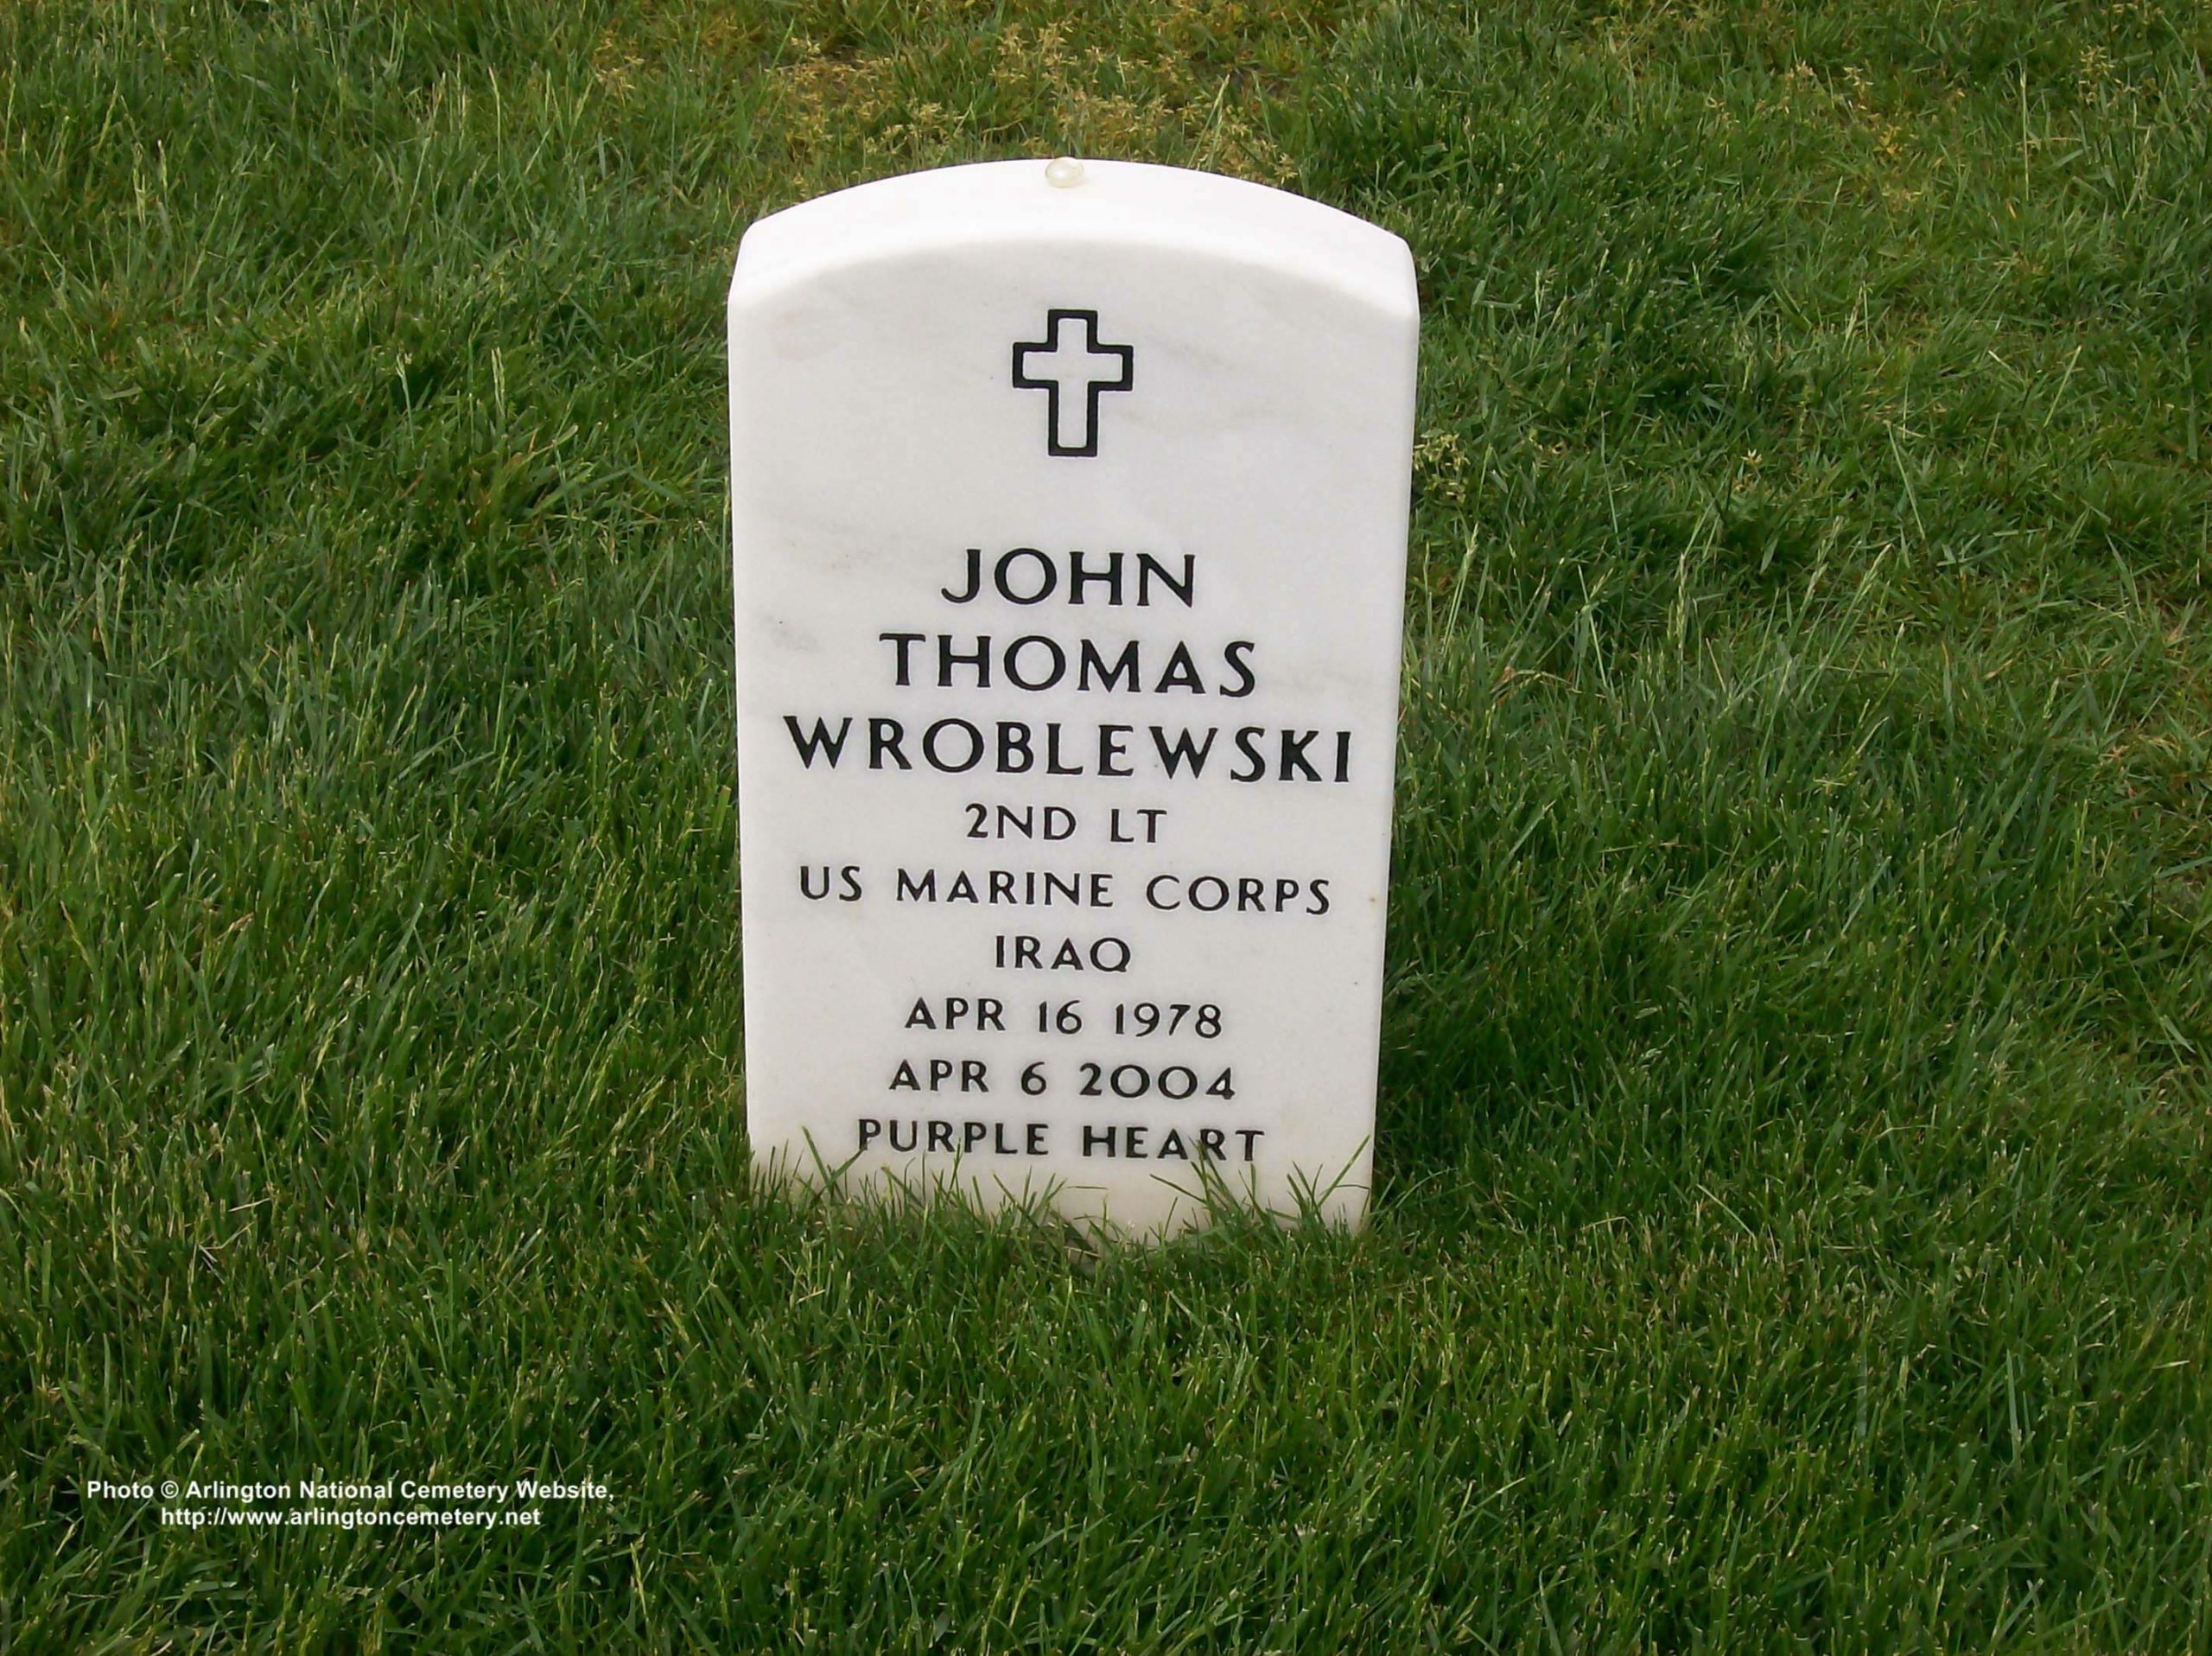 jtwroblewski-gravesite-photo-may-2008-001